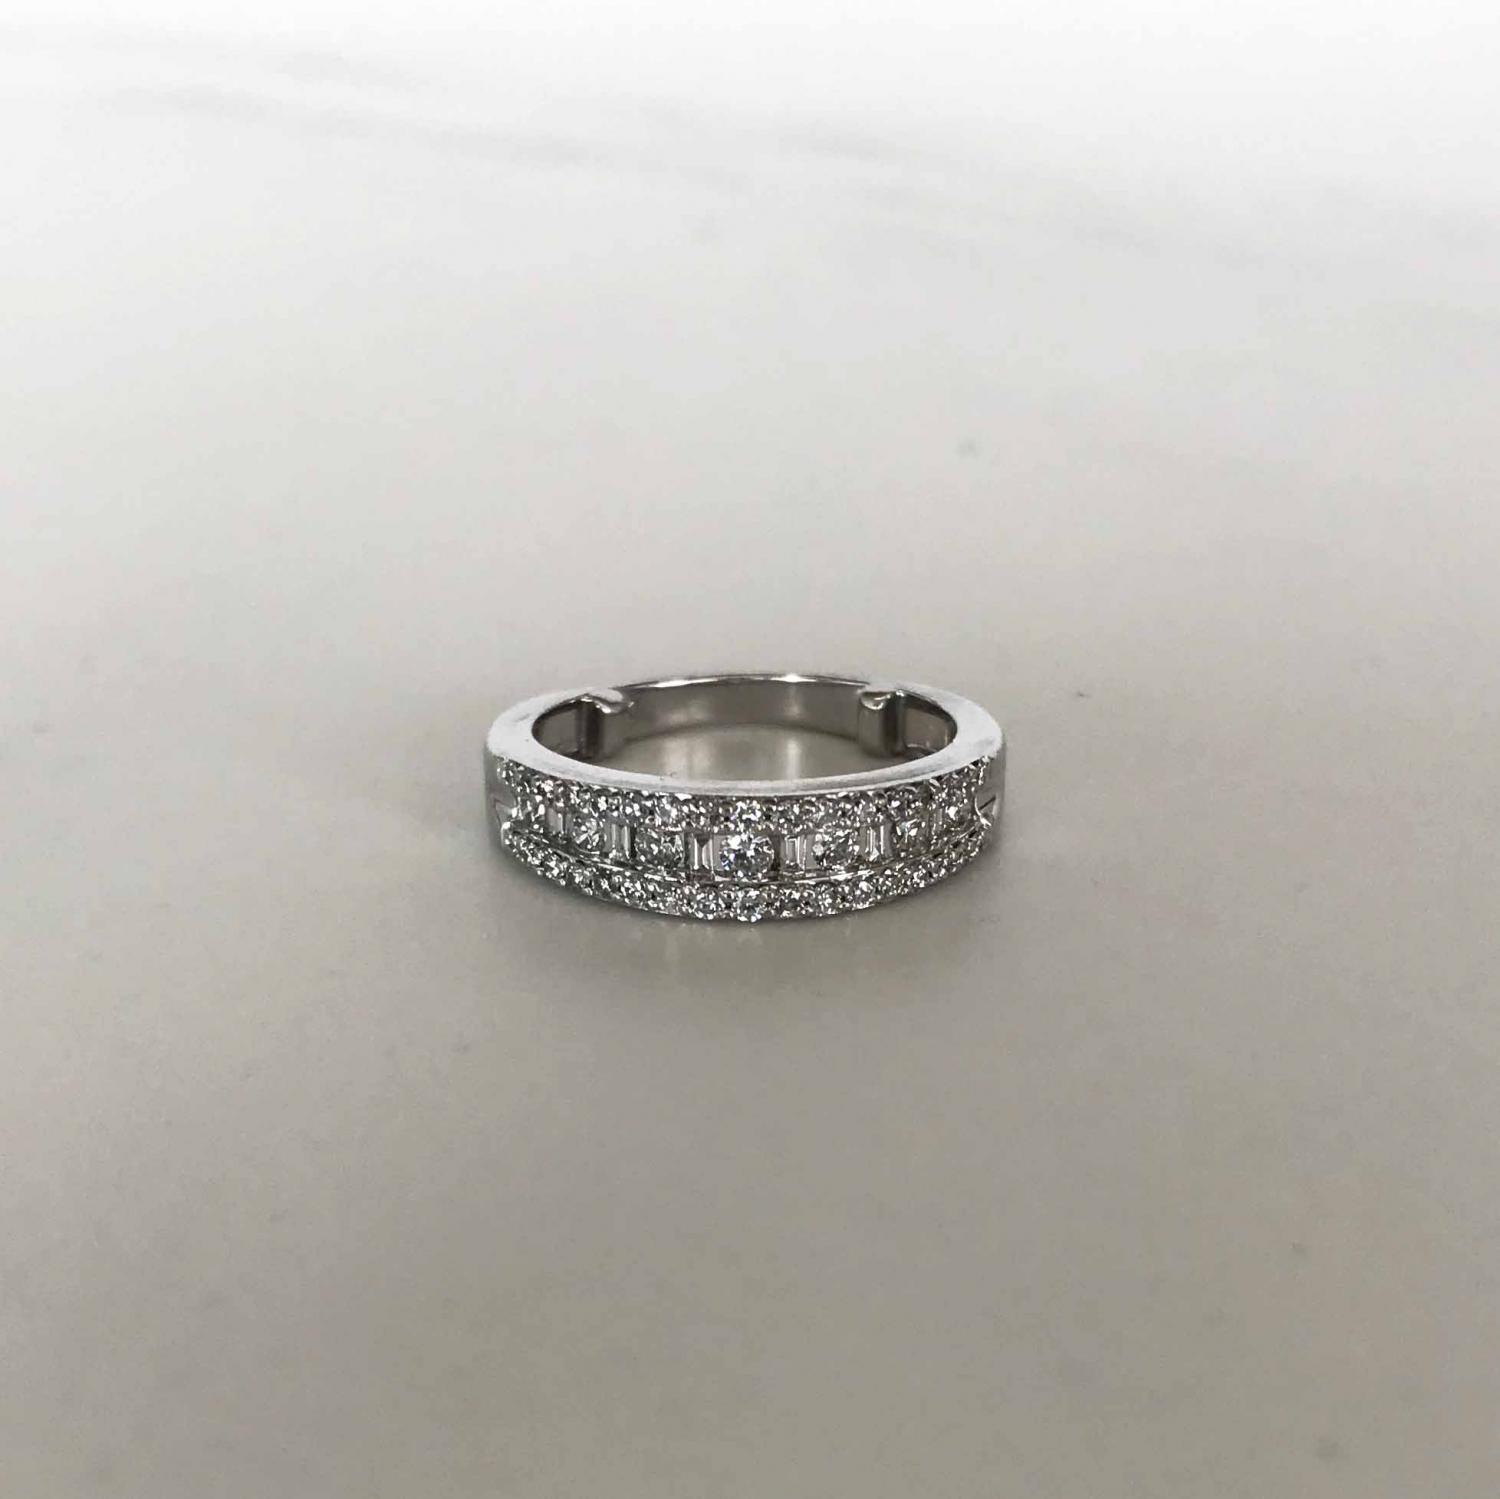 10ct Diamond Band Ring - Price Estimate: $70 - $120